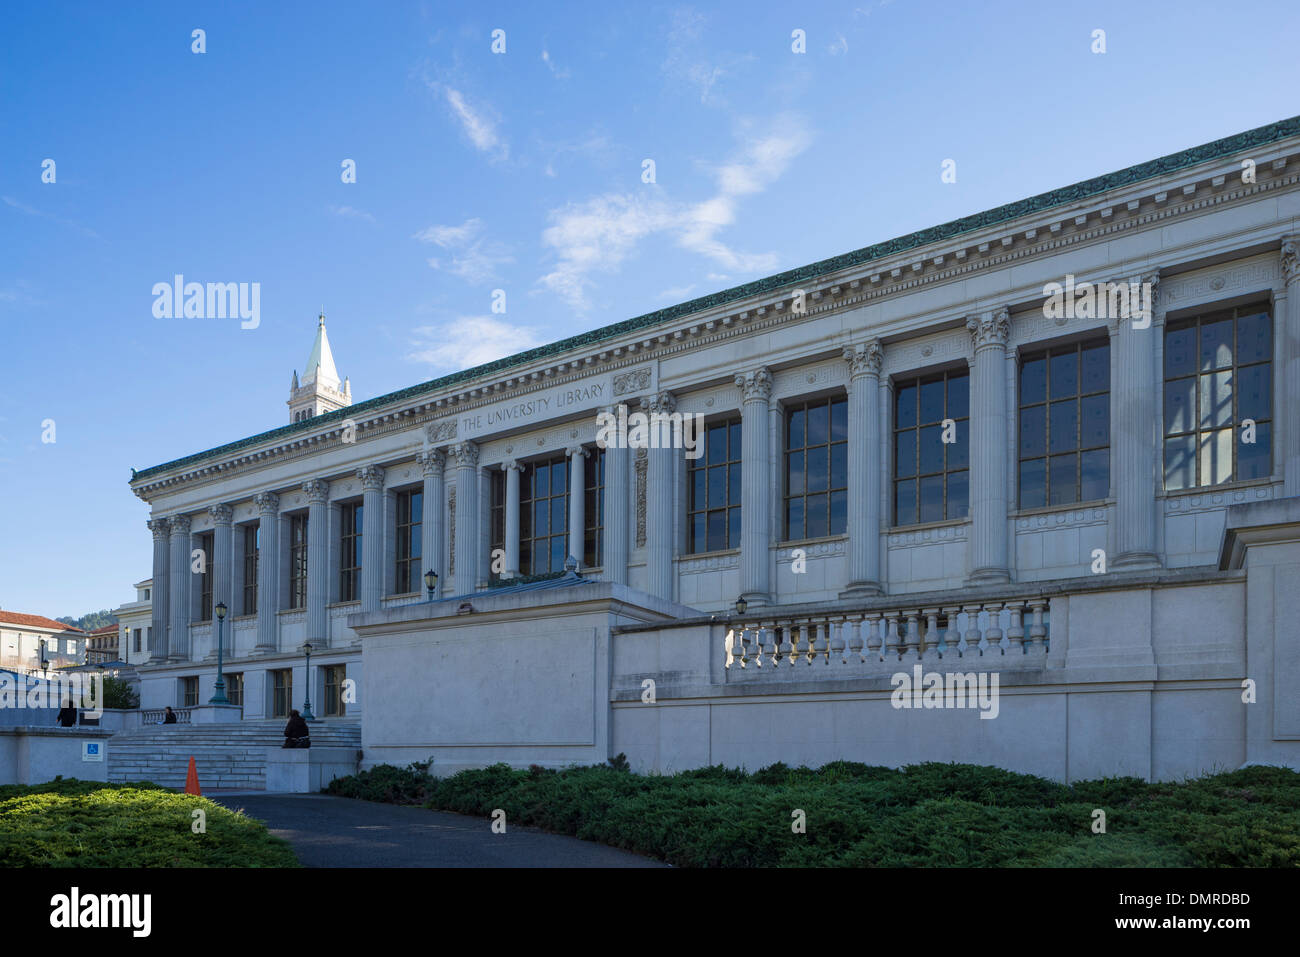 University of California, Berkeley Library. Stock Photo